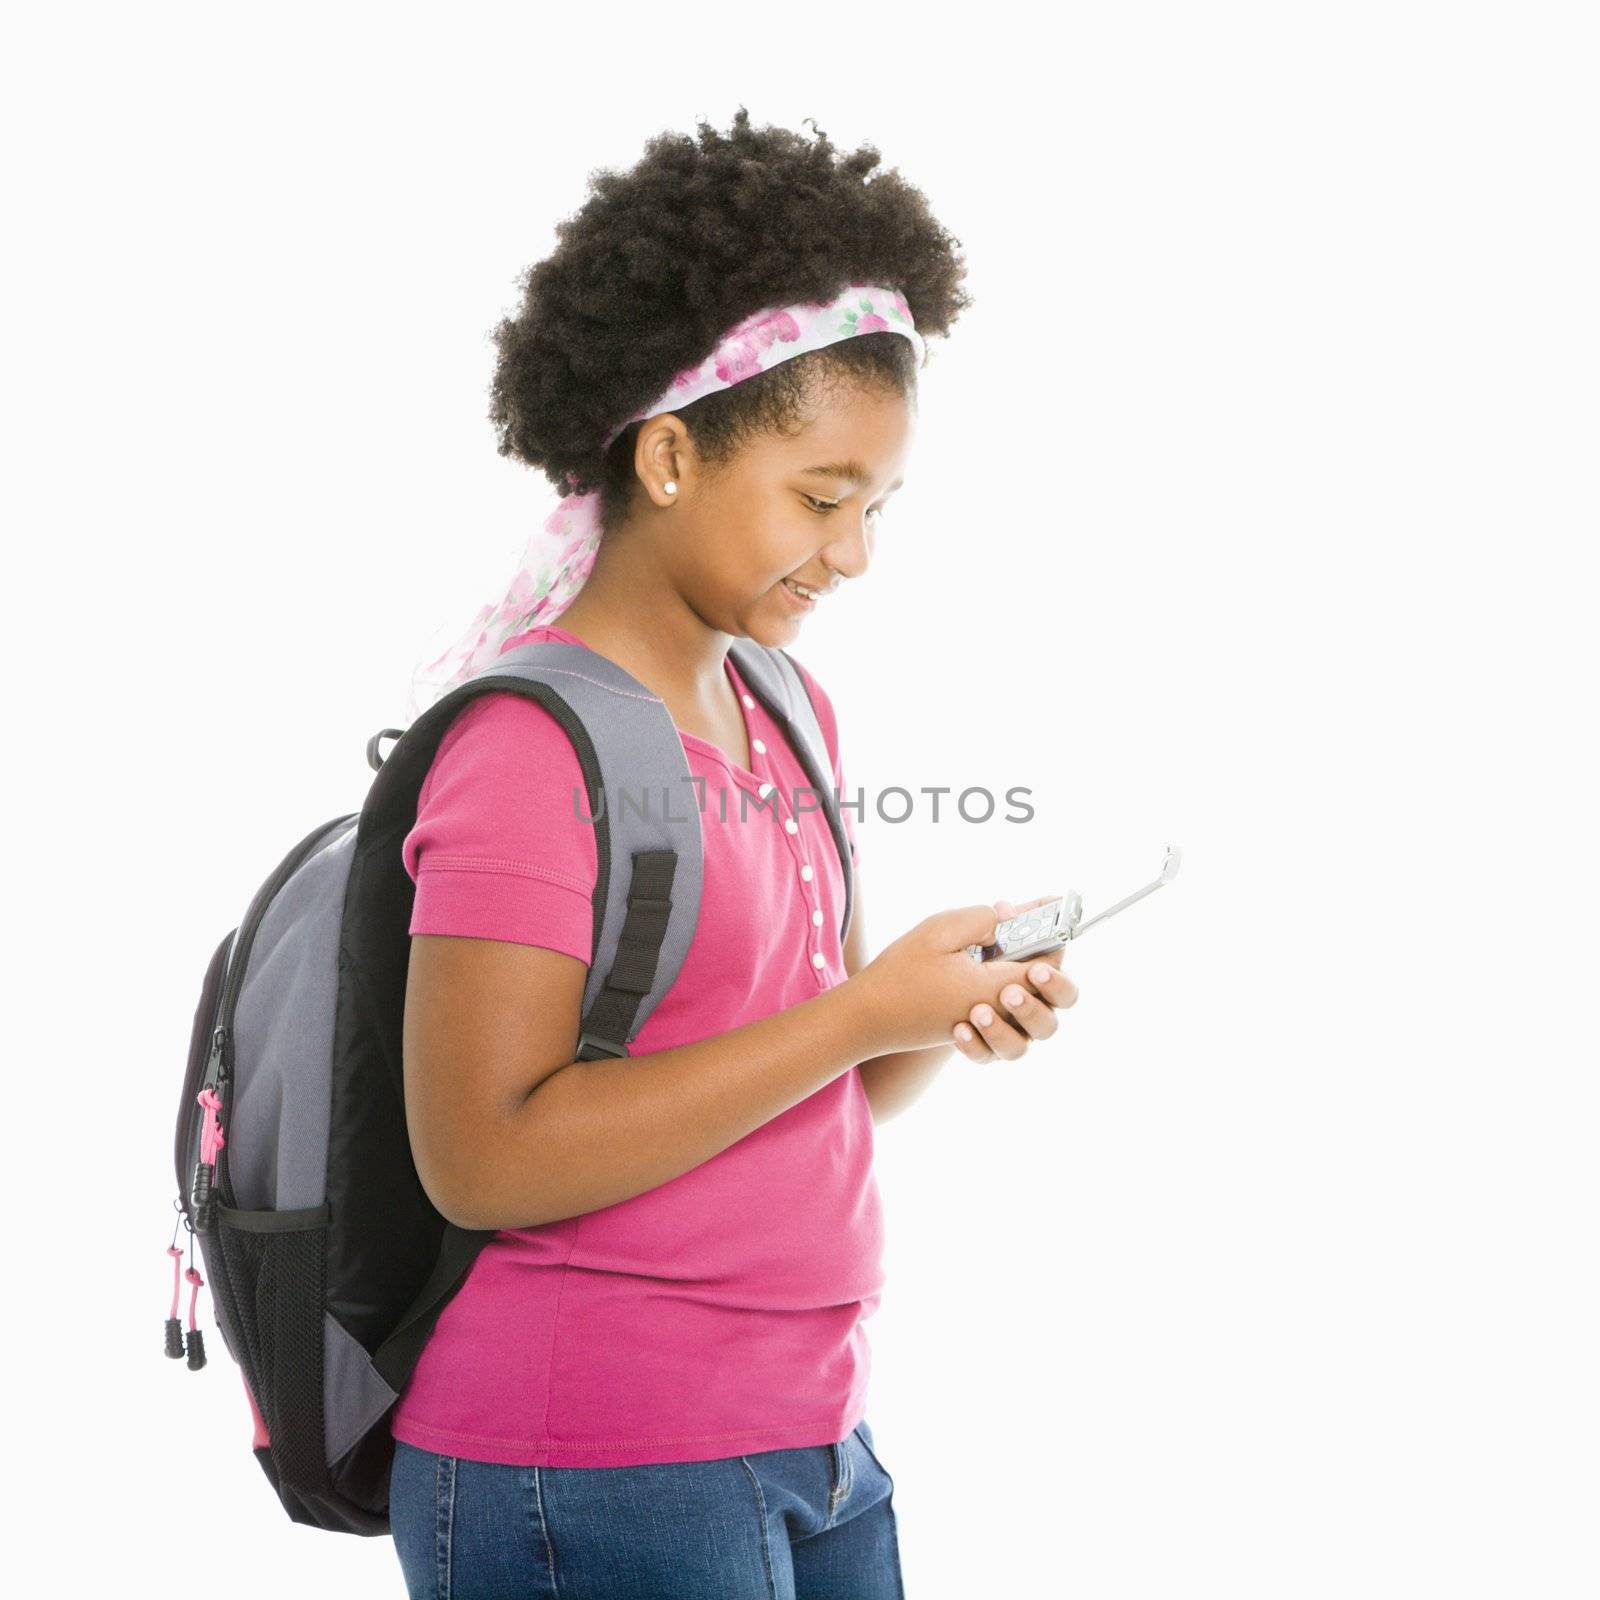 Schoolgirl with phone. by iofoto